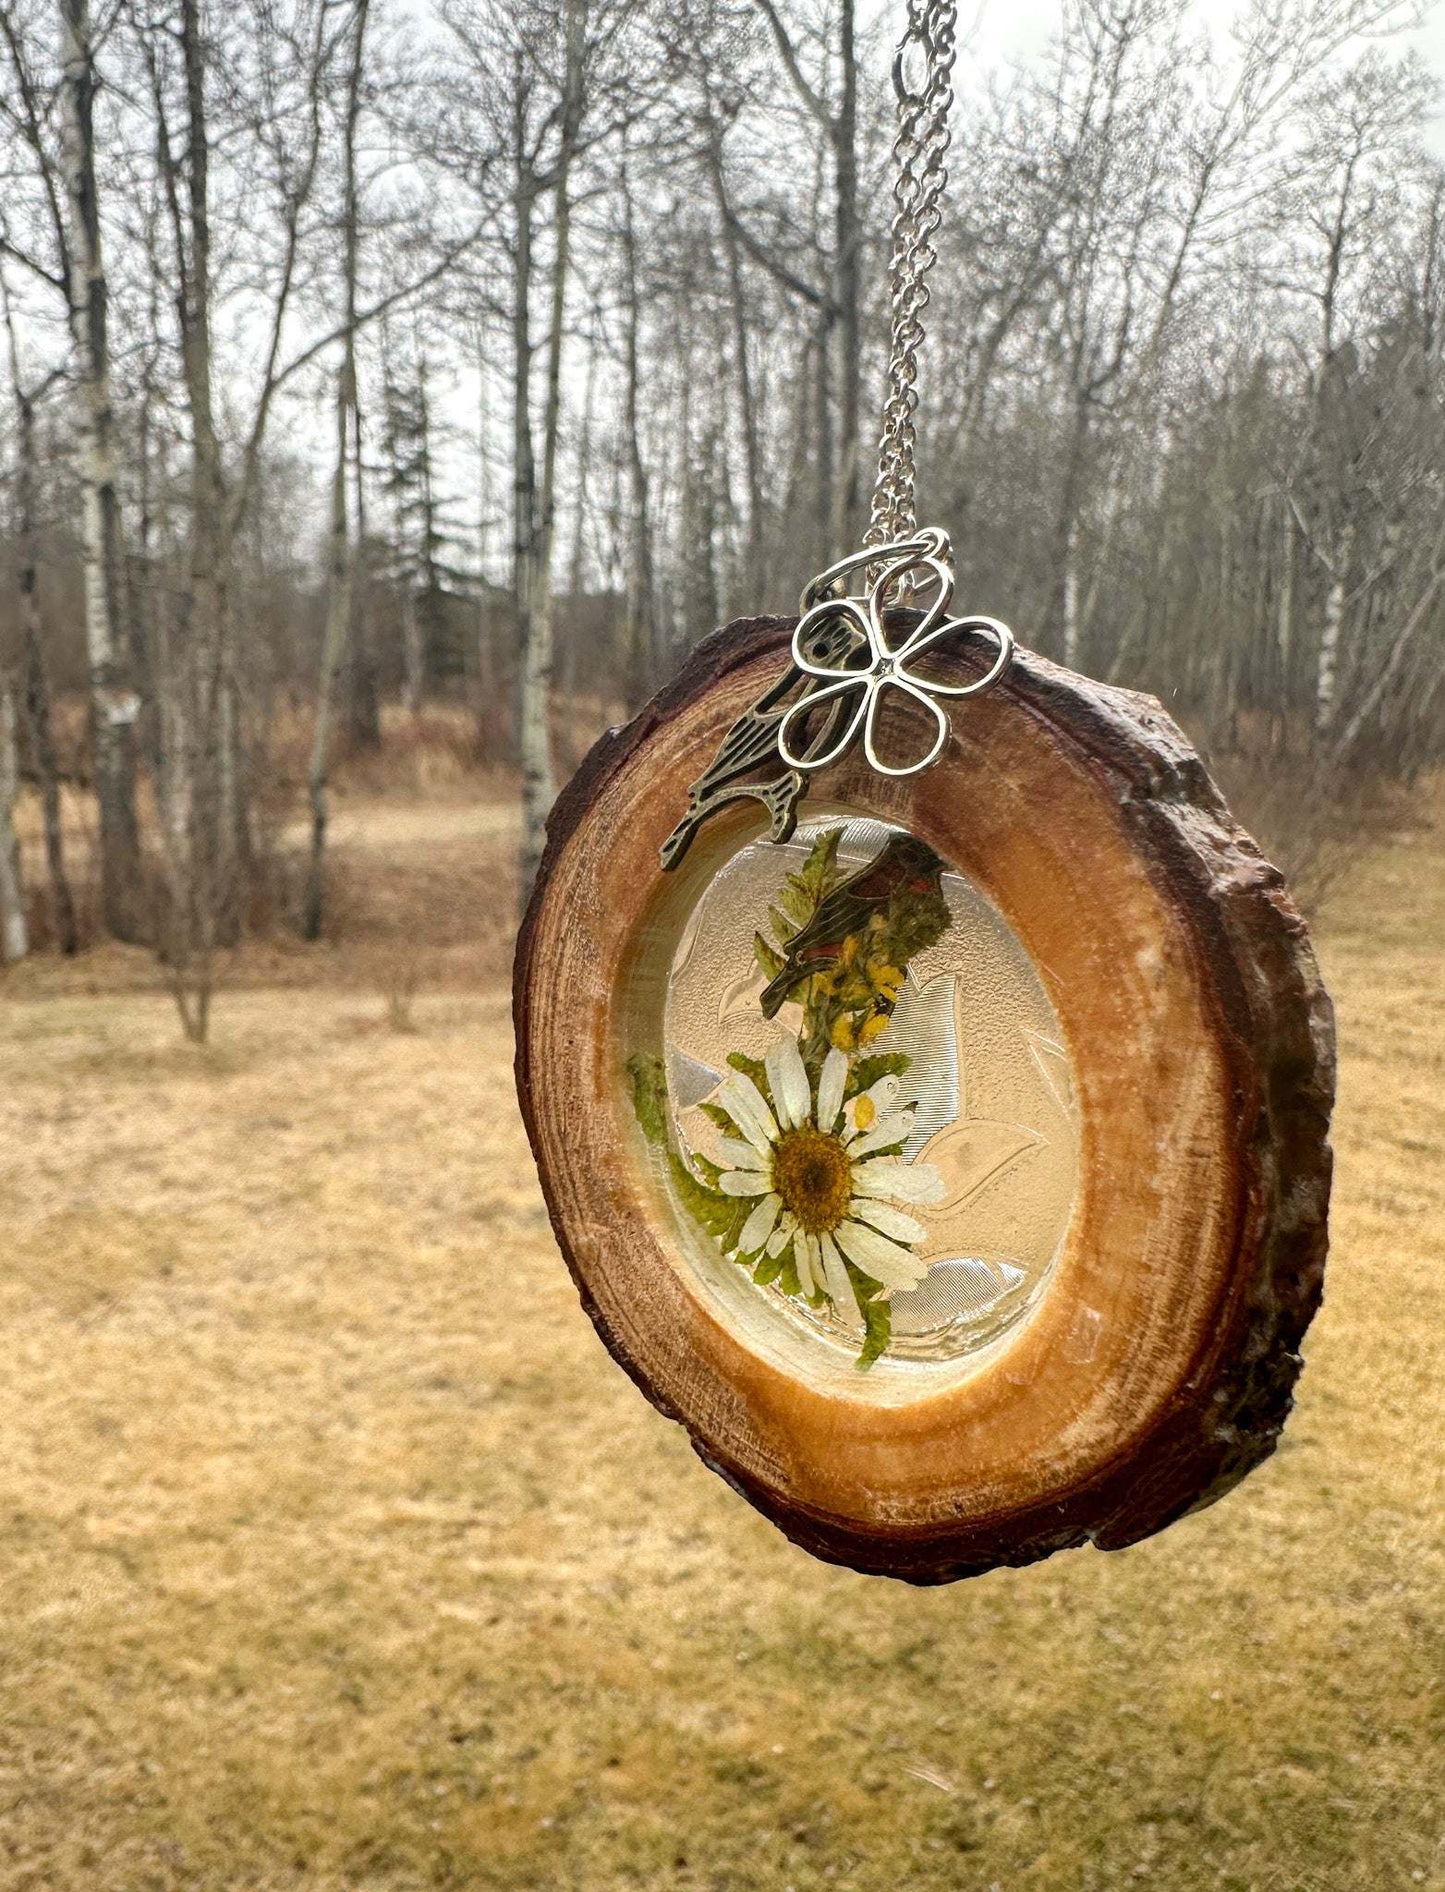 Enchanted Forest: Rustic Wood Suncatcher Home Decor Gift Idea